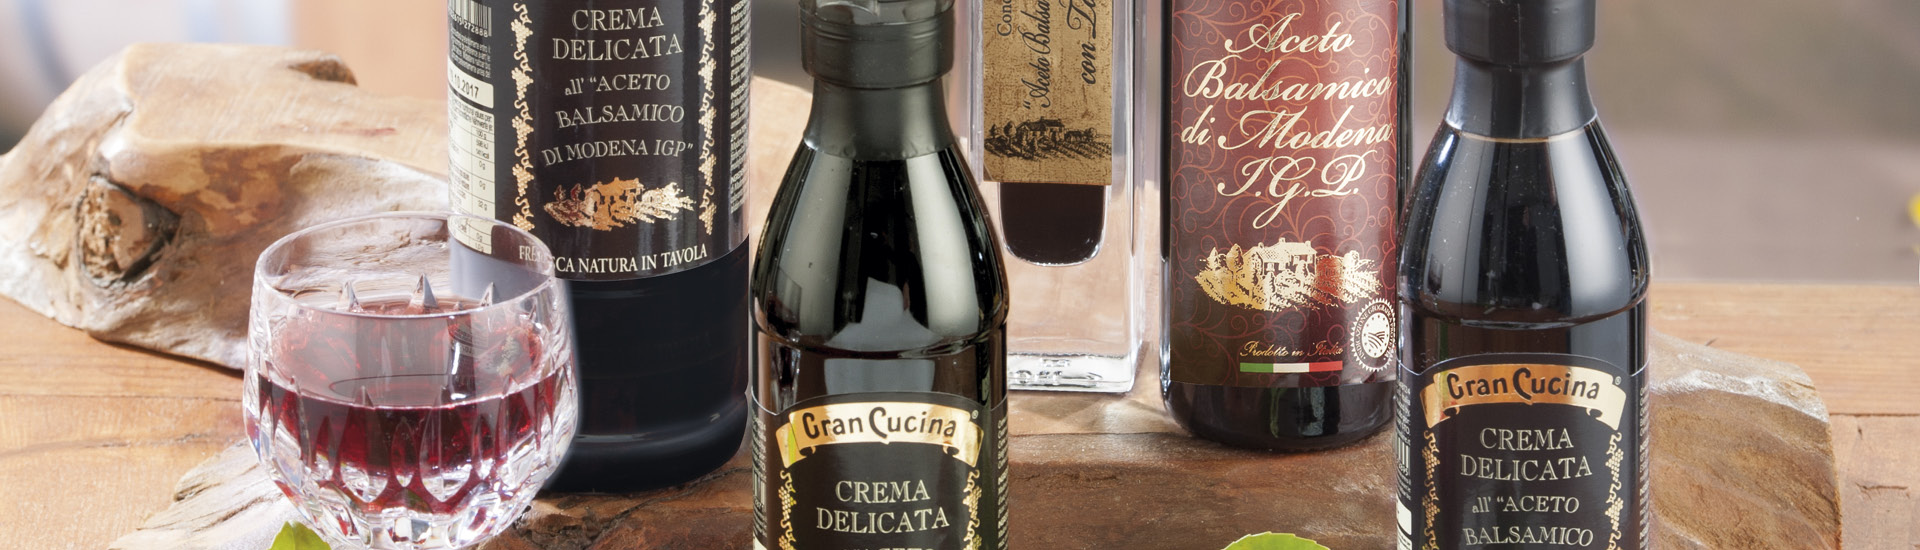 Gran Cucina Balsamic Vinegar is the Protagonist